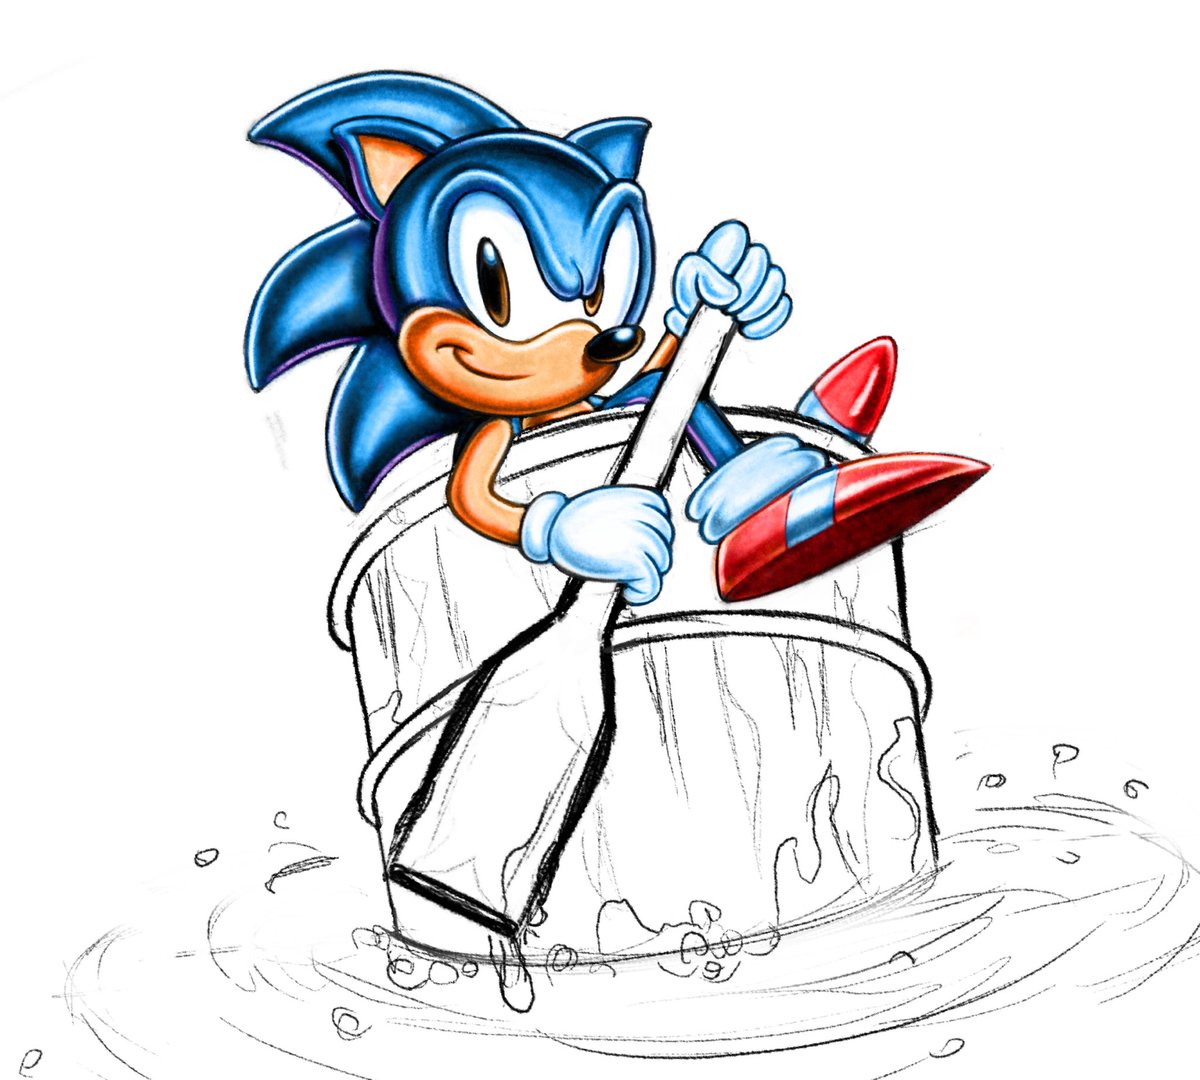 WIP Greg Martin style Sonic Spinball artwork 2. #SonicTheHedgehog #Sega #SonicSpinball